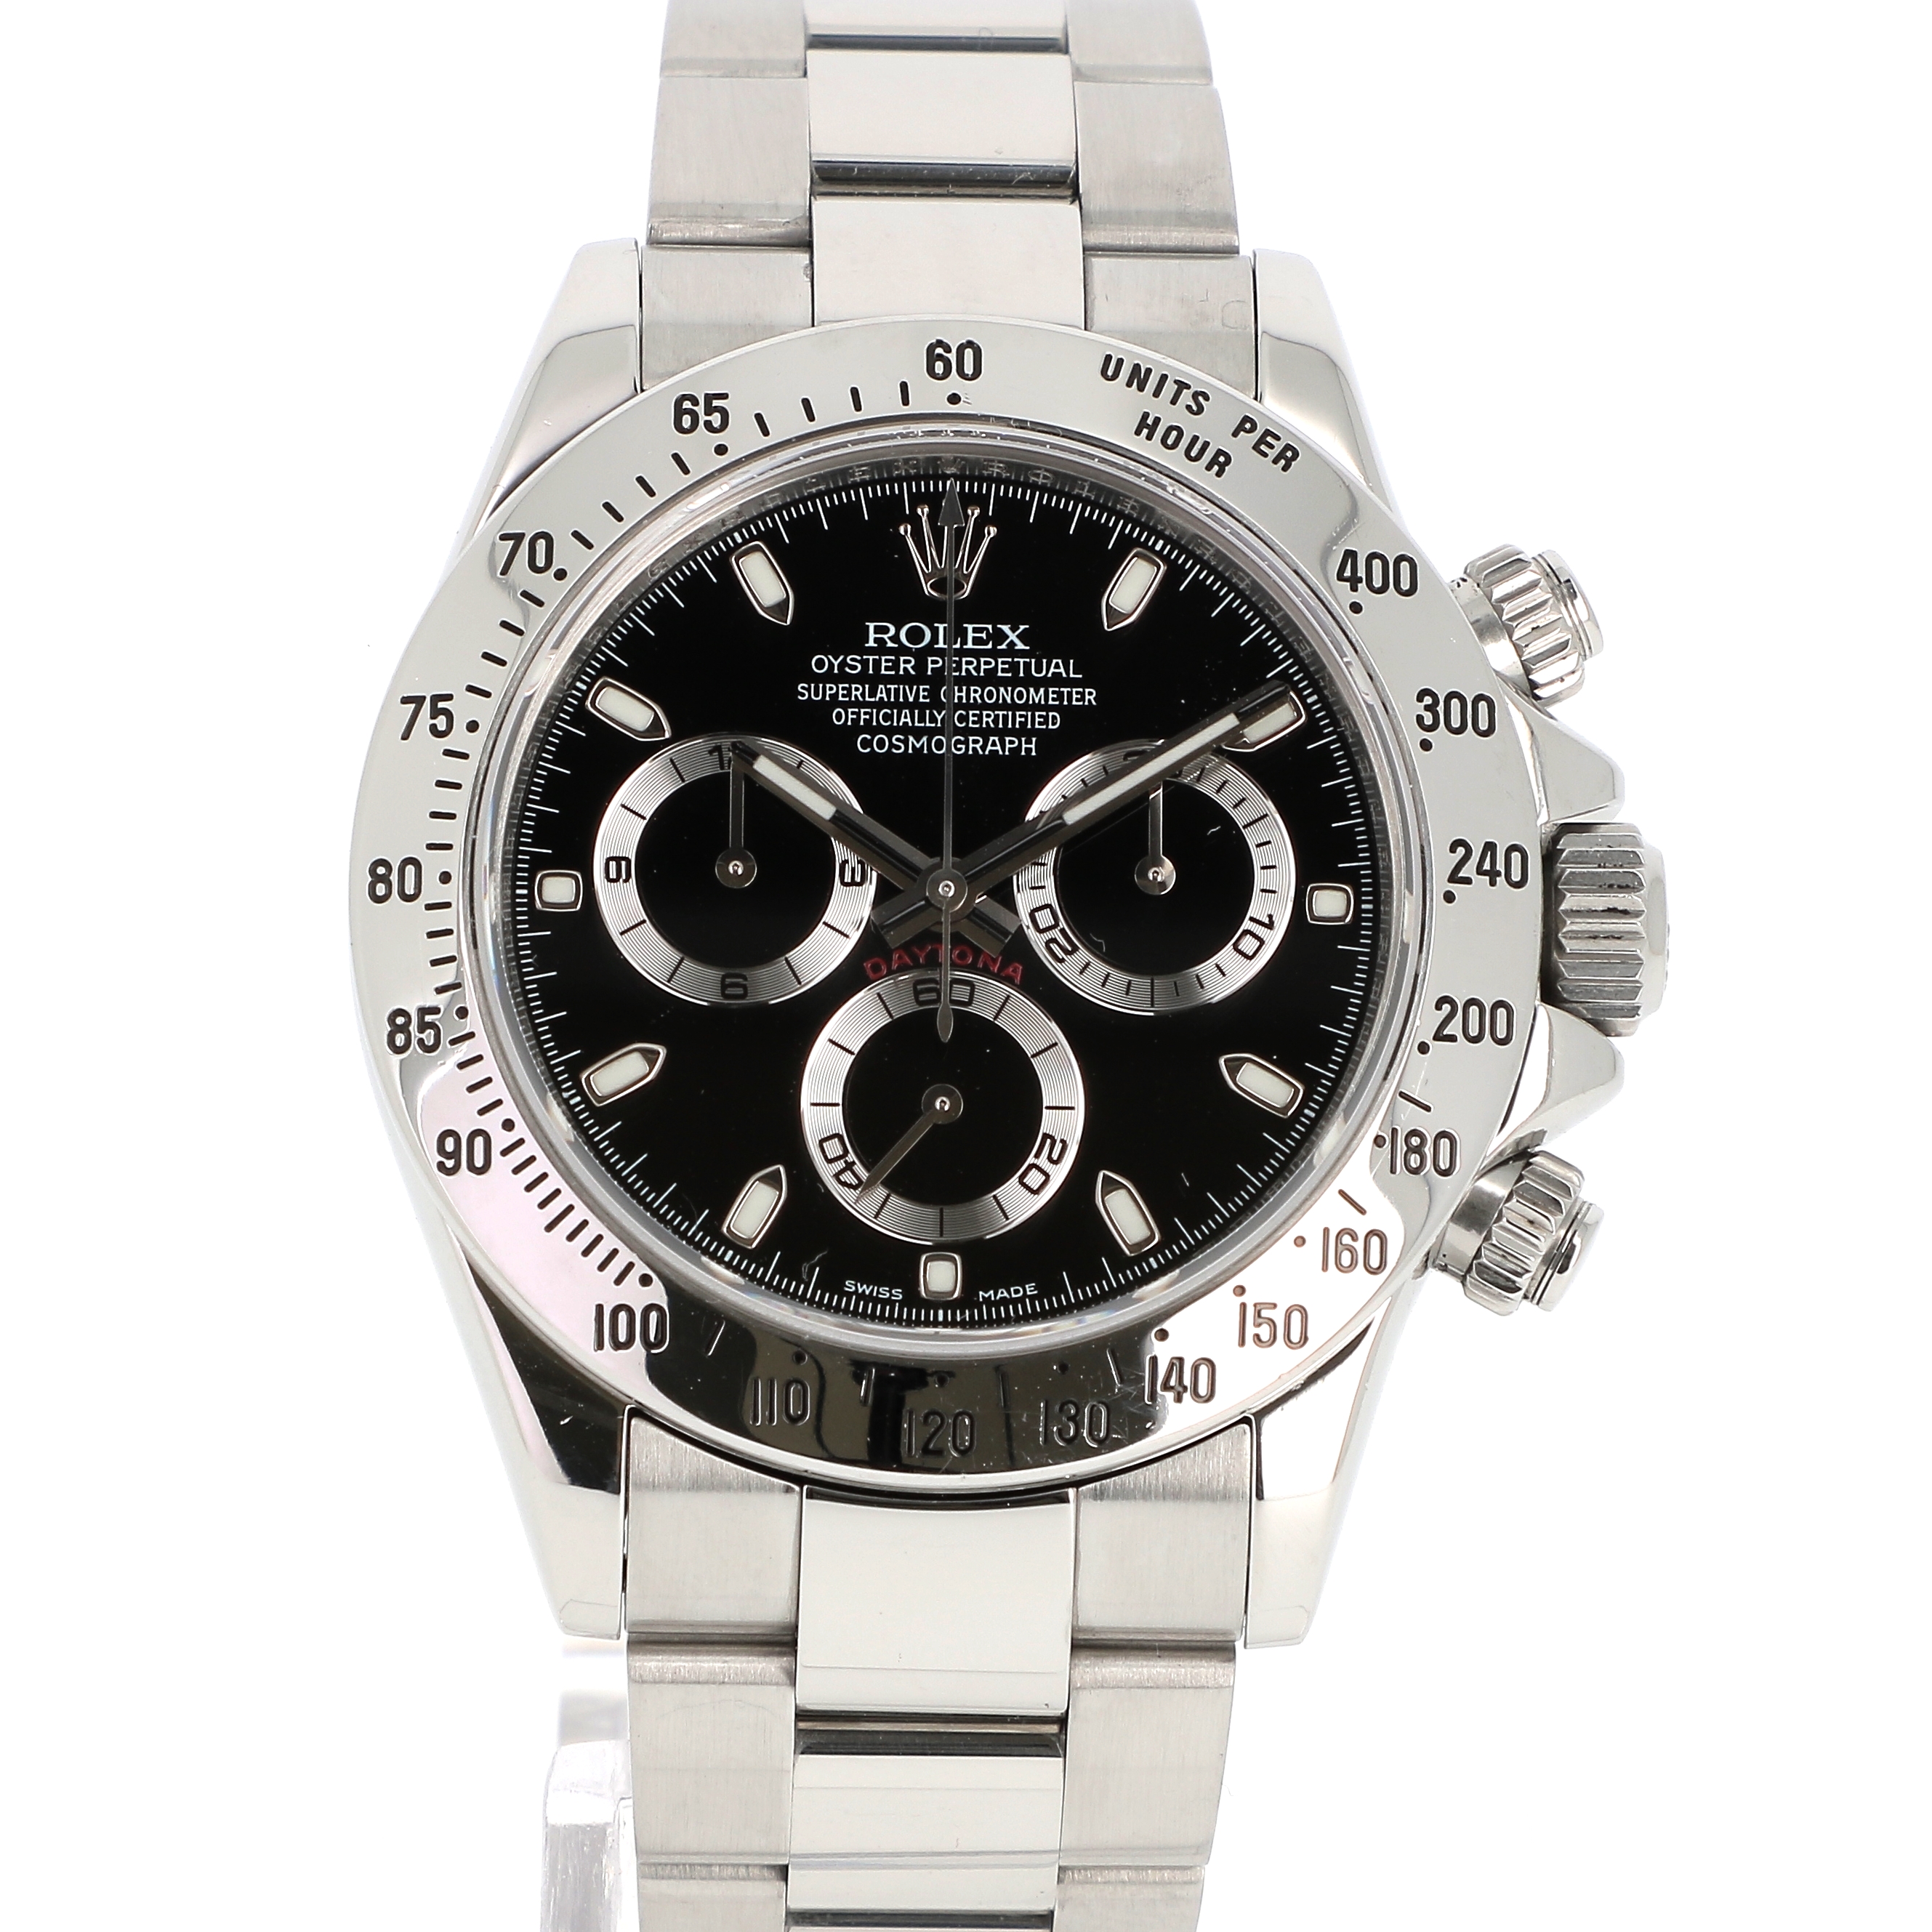 116520 watch